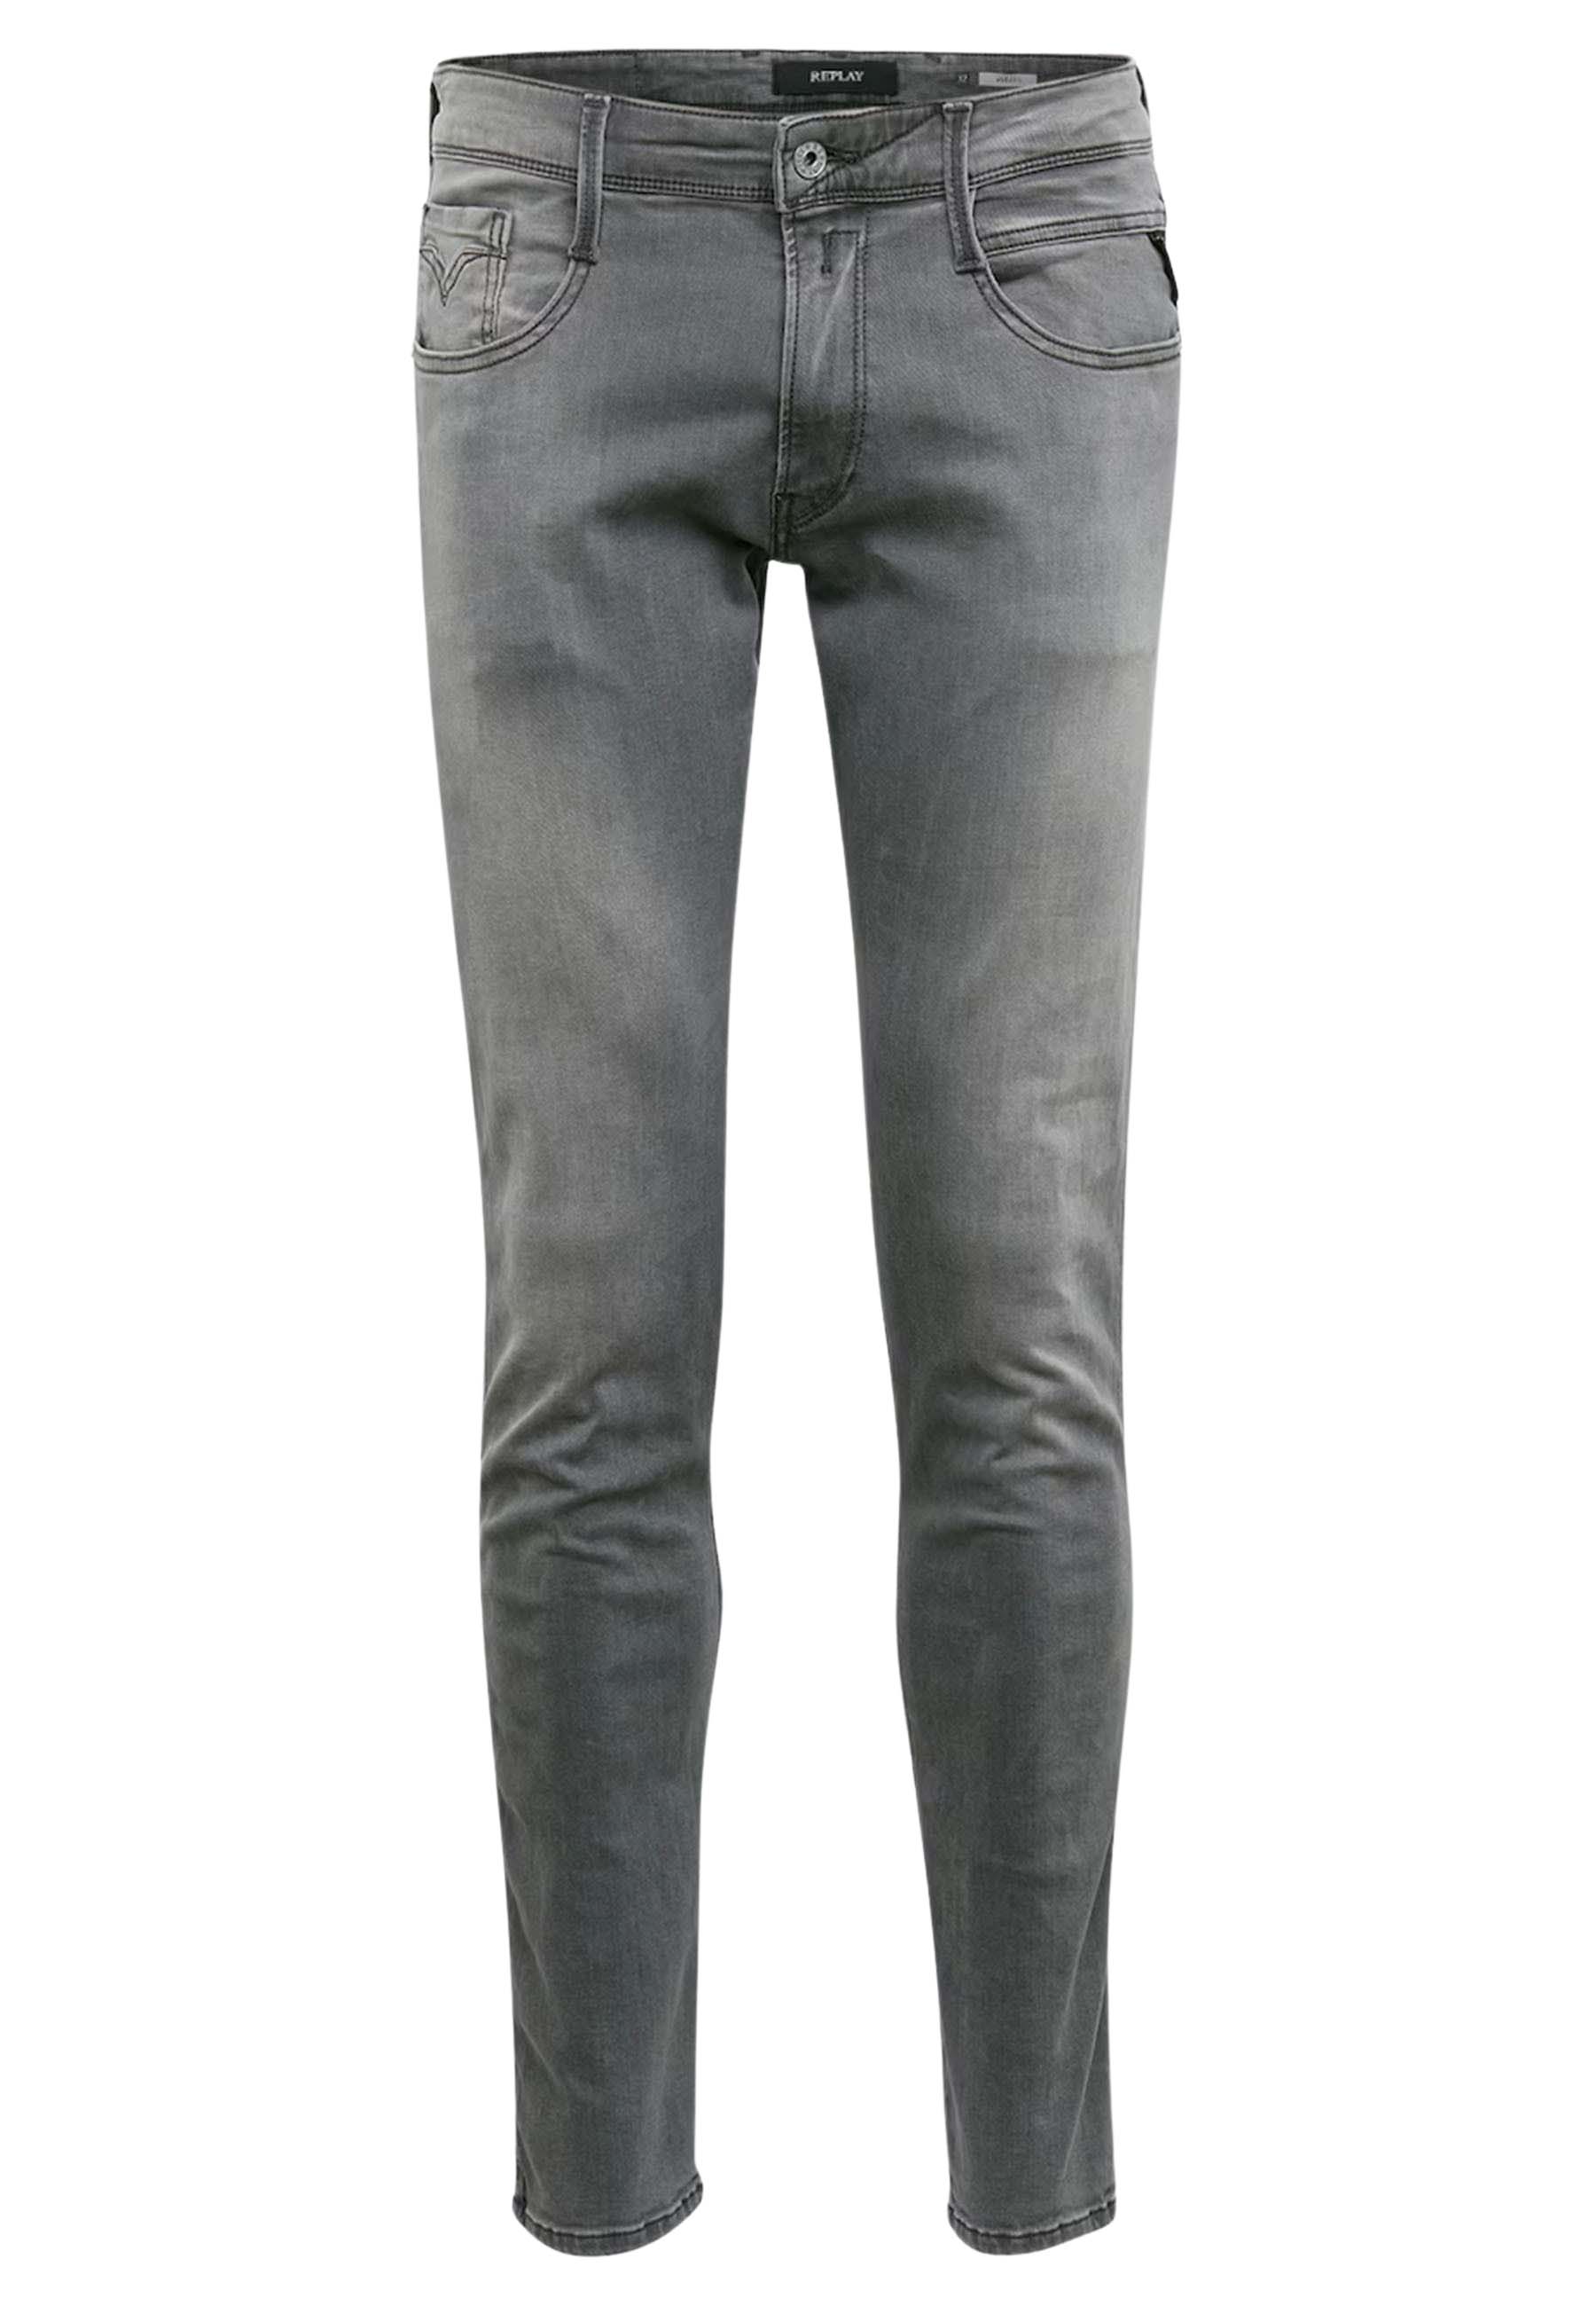 Replay Anbass jeans grijs Heren maat 31/32